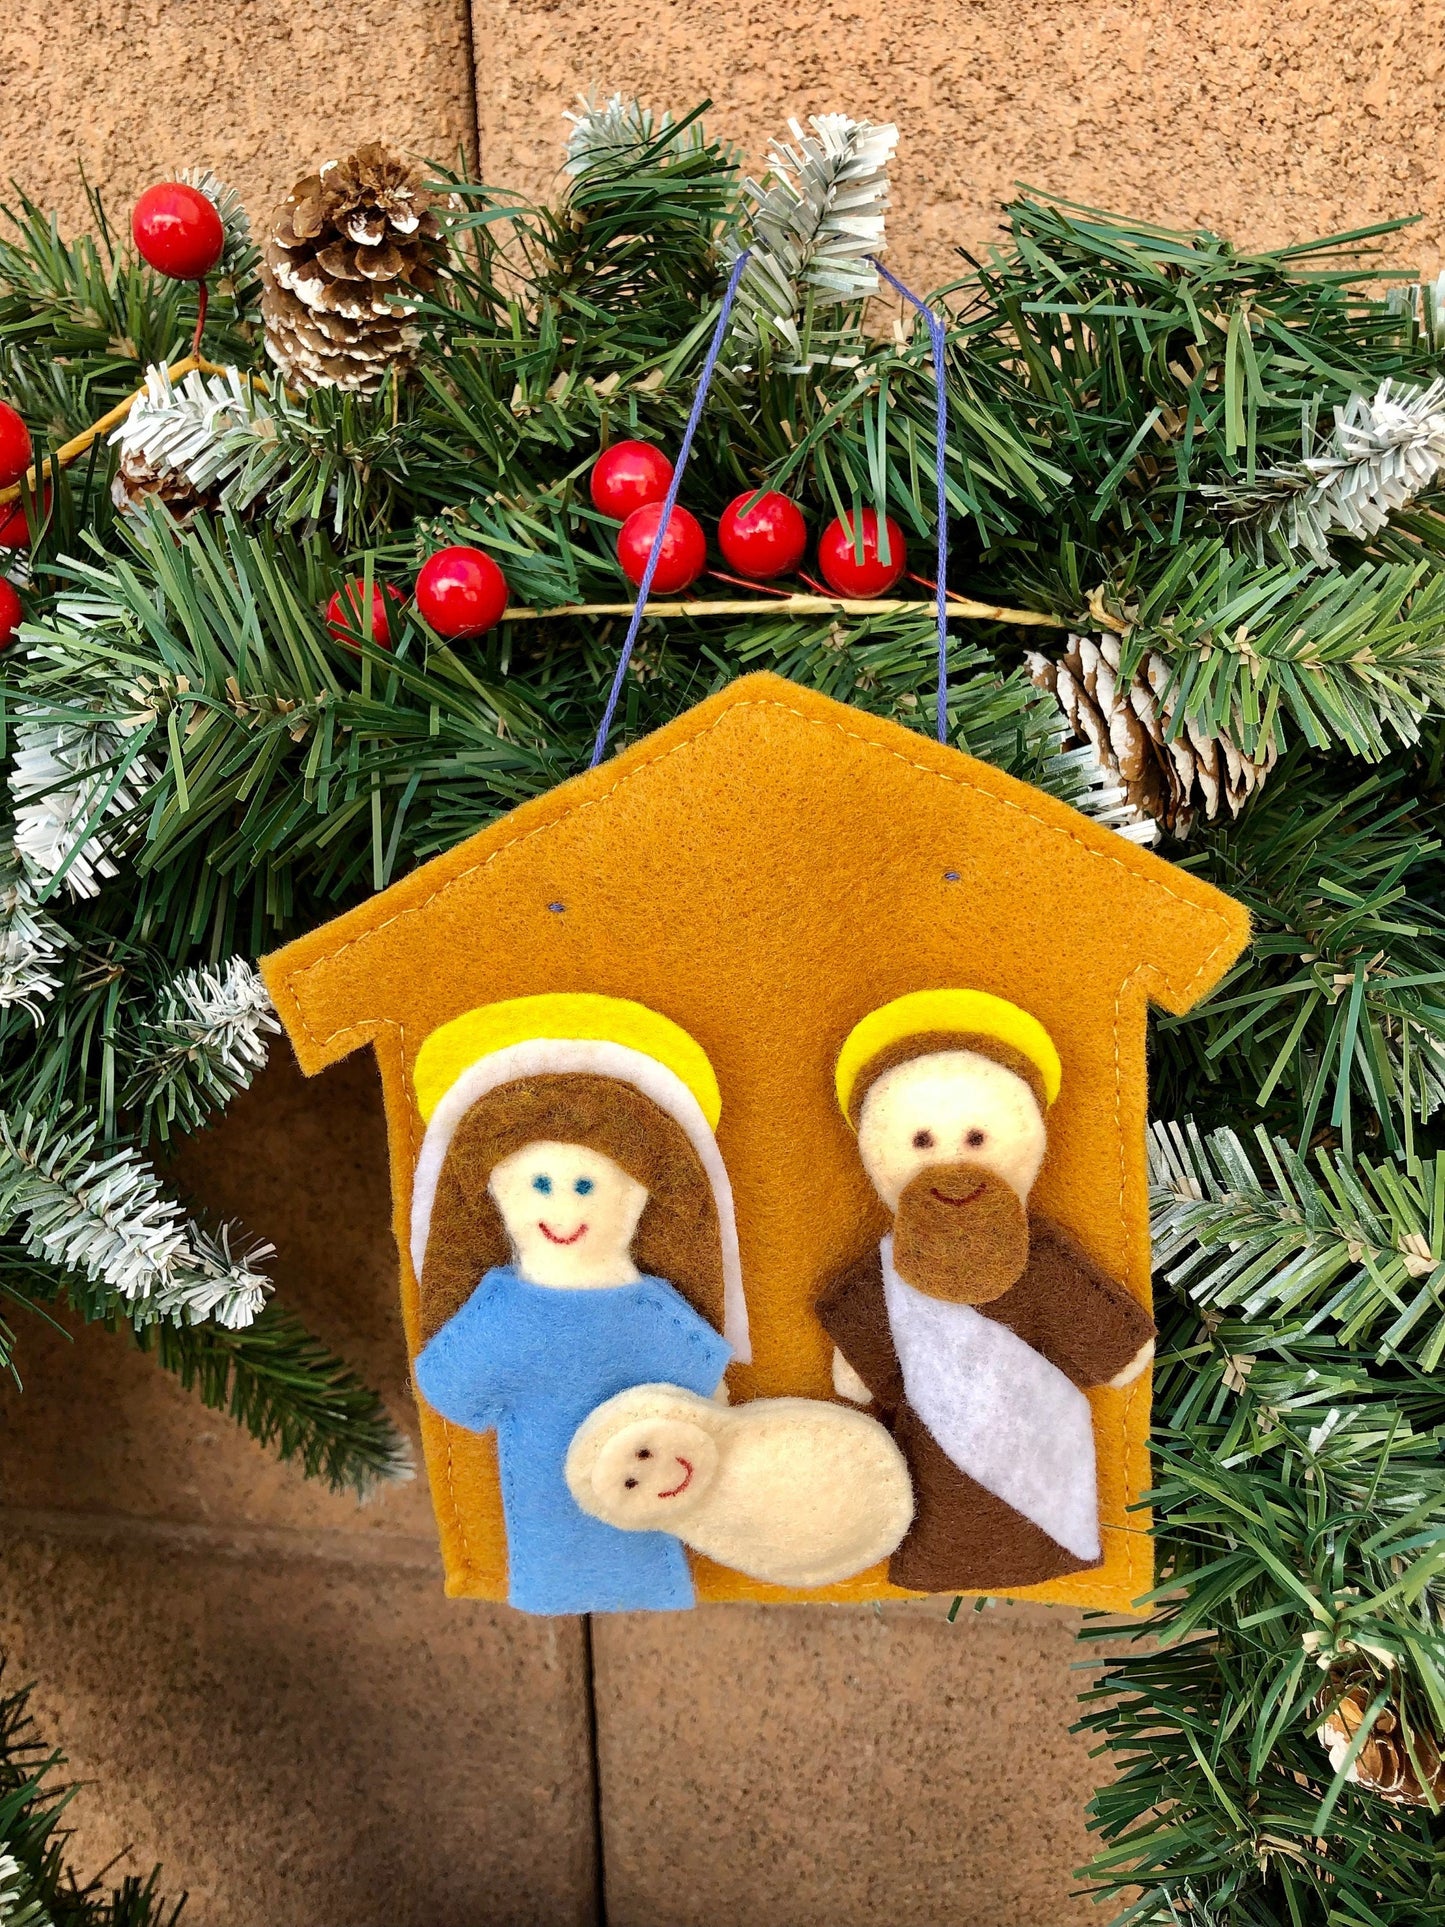 Felt Nativity Scene Ornament / detachable Christmas Ornament